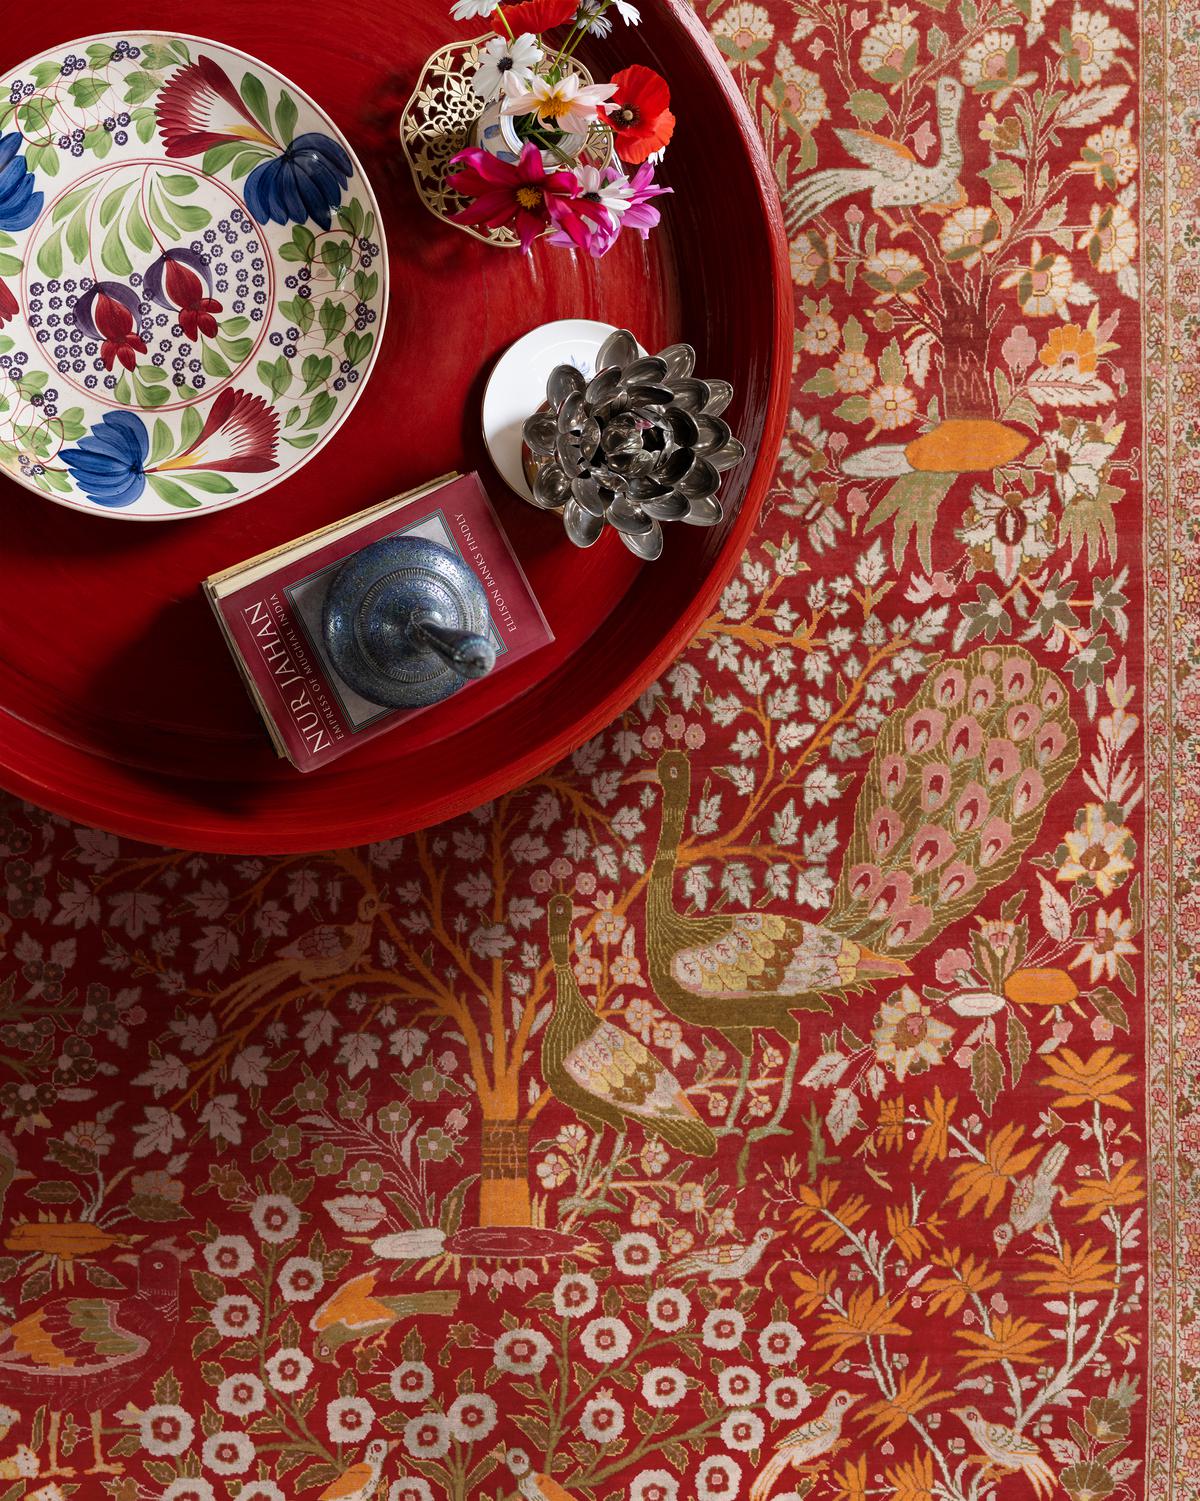 Tabriz Carpet imagined at Anita Lal’s home in Delhi